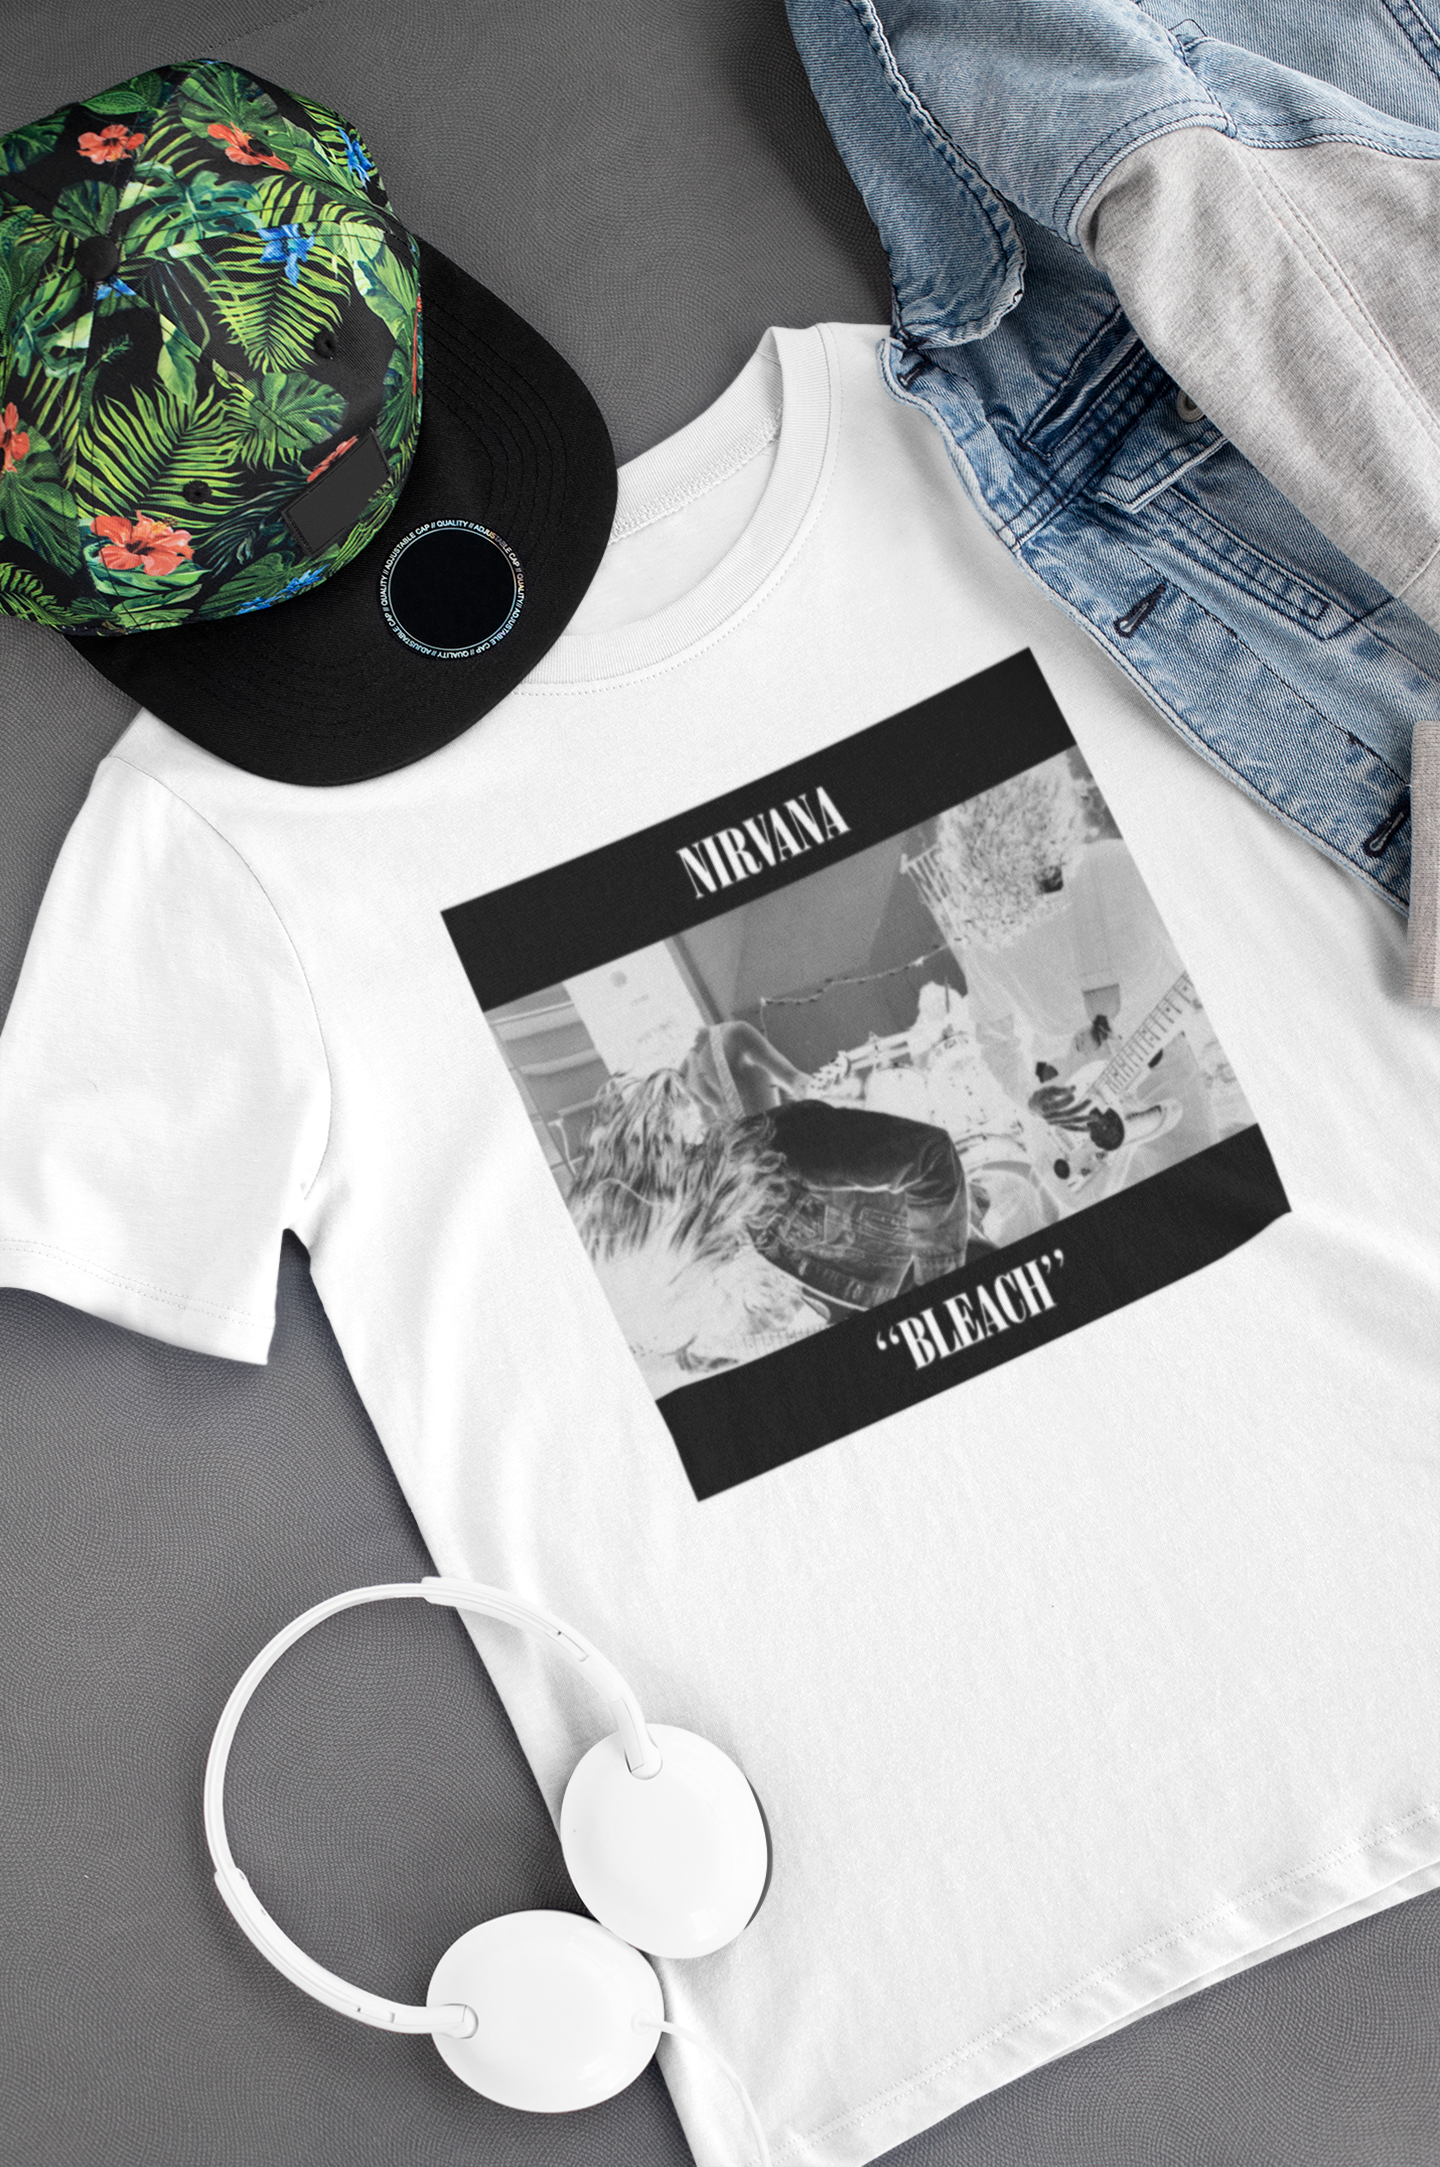 Camiseta 'Bleach - Nirvana' - Álbum - Música Projeto Fan Service